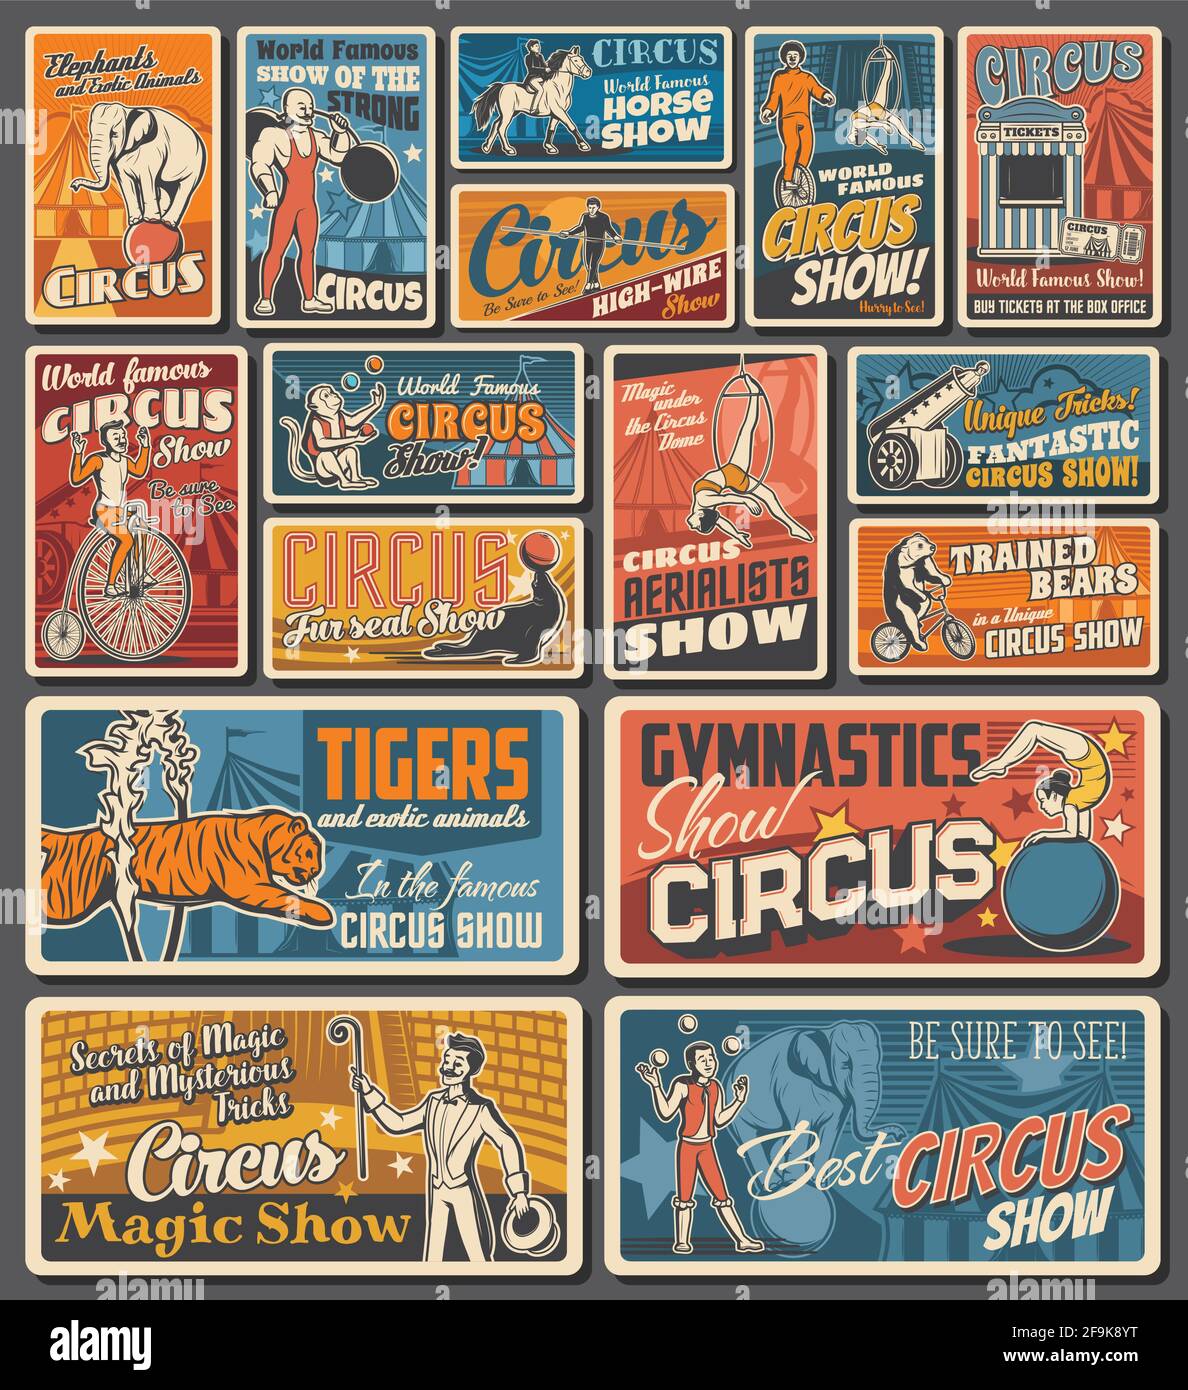 New Carnival Wall Light Tiger Thrills Circus Funfair Tin Sign Large Art Vintage 